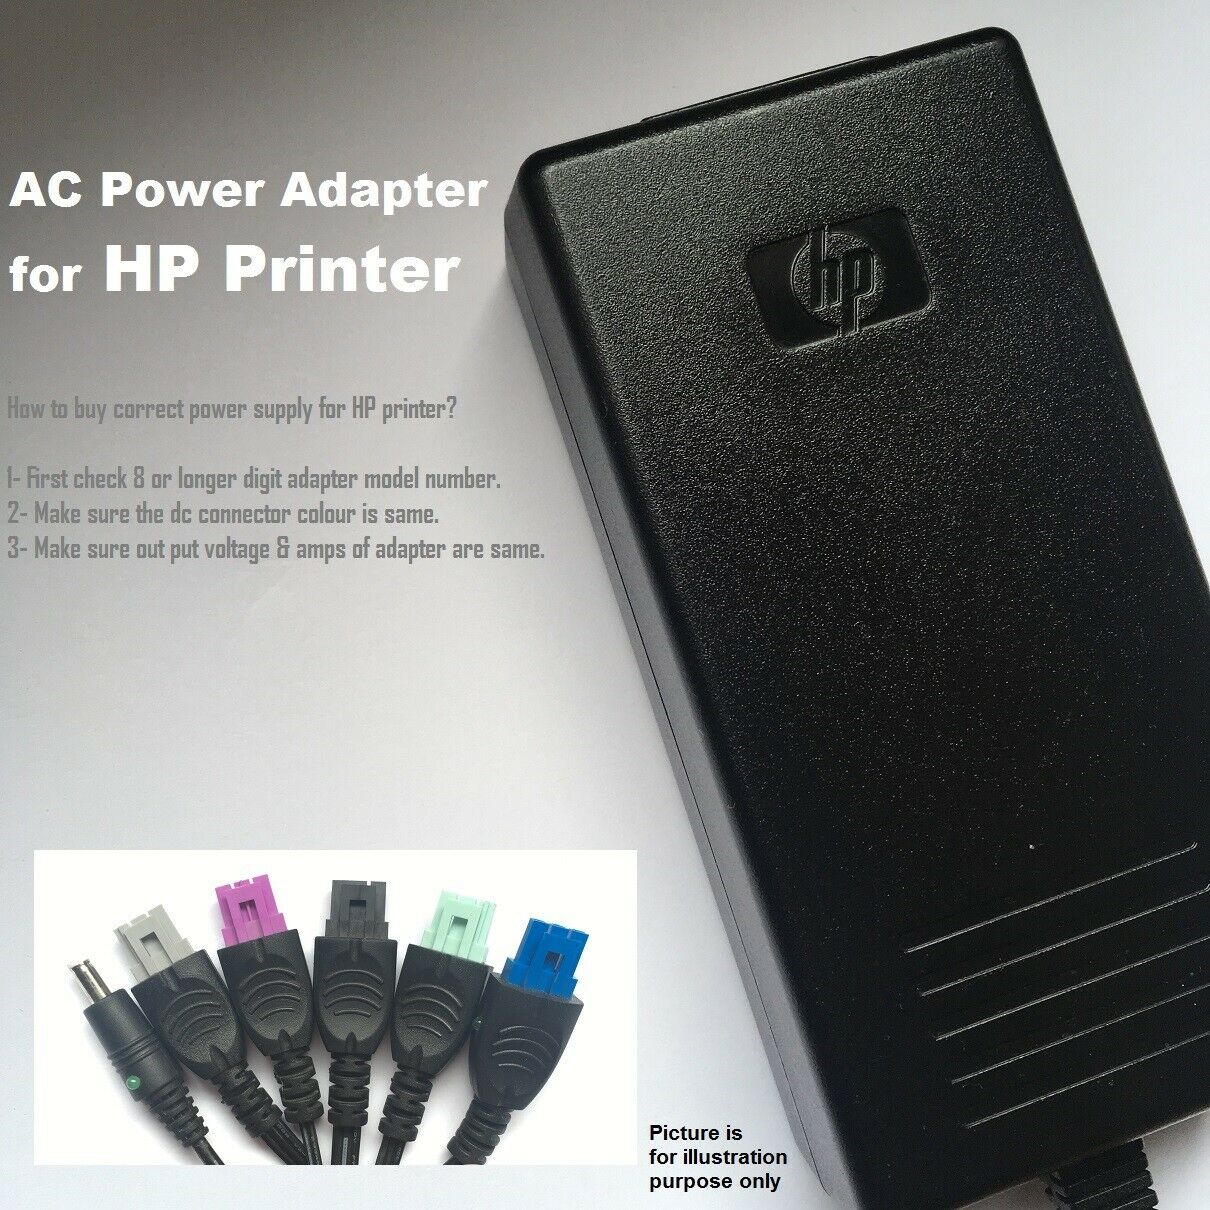 0957-2280 32V 750MA, Power Supply Adapter for HP Printer, Purple Genuine Power Supply Adapter for HP Printer. 1 Year Wa